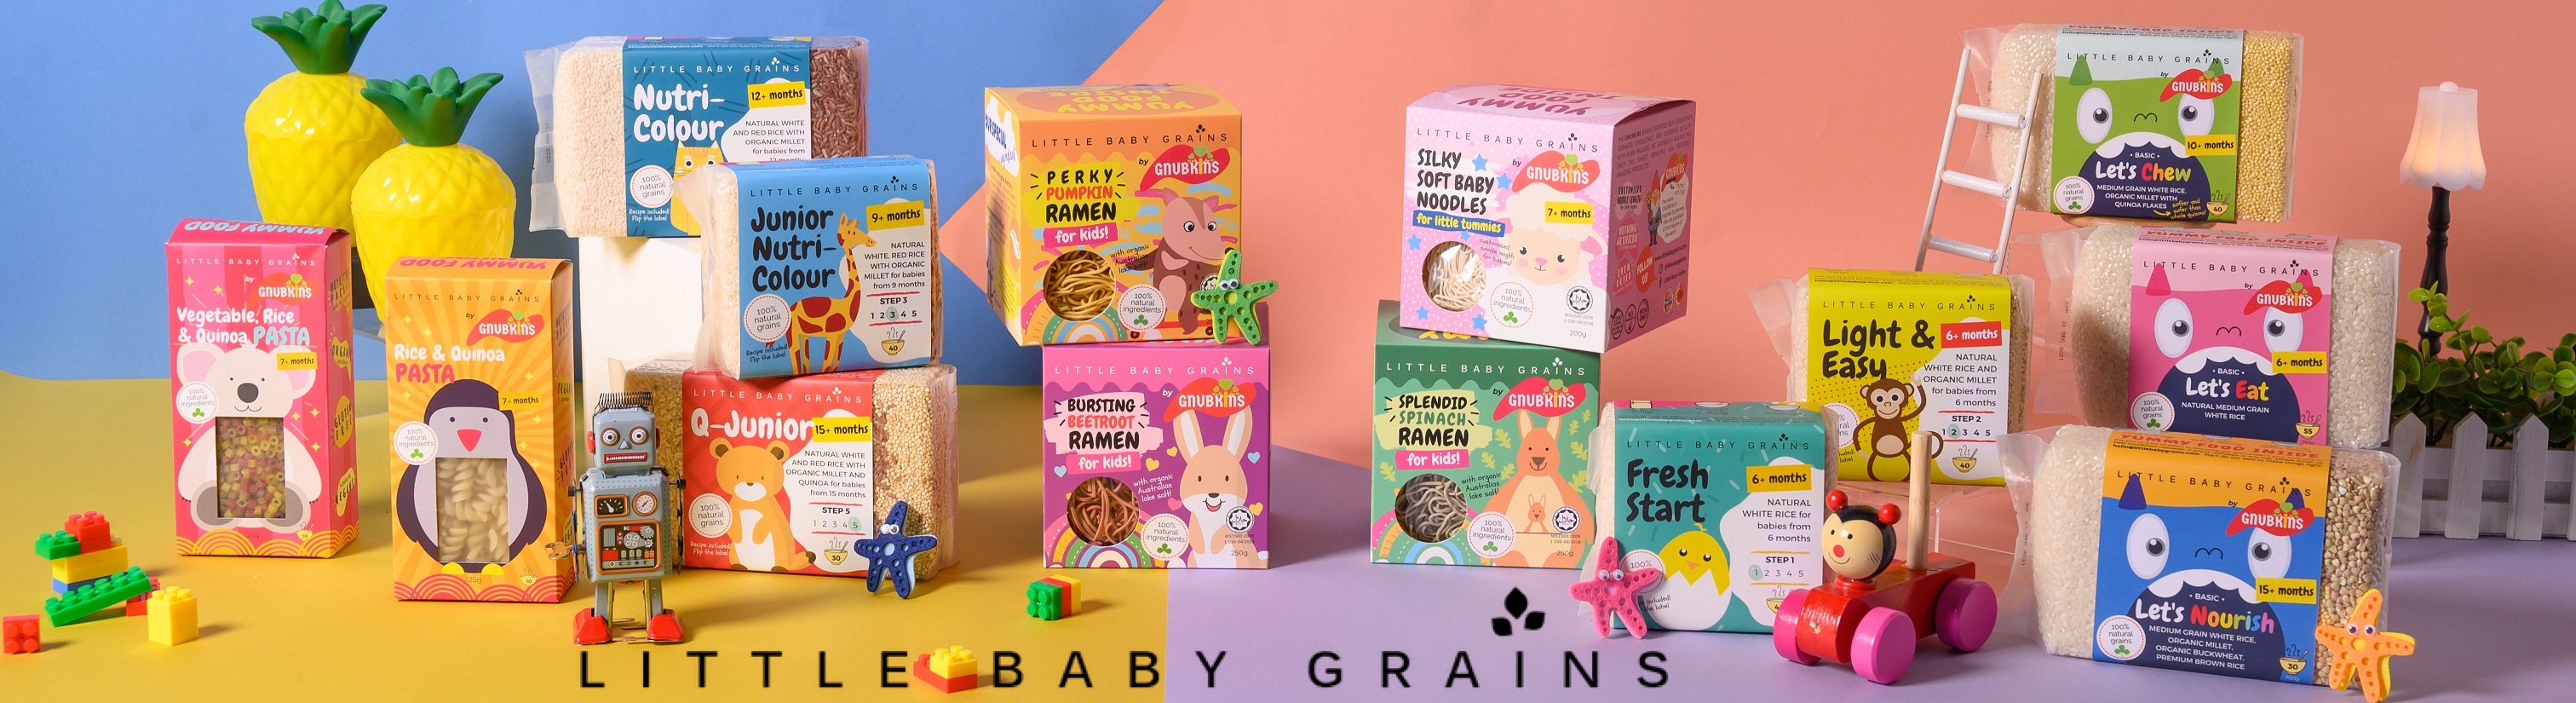 little baby grains by gnubkins baby organic natural grains rice noddles pasta ramen cereal baby solids baby food 宝宝有机天然米粥米糊面食 makanan bayi solid